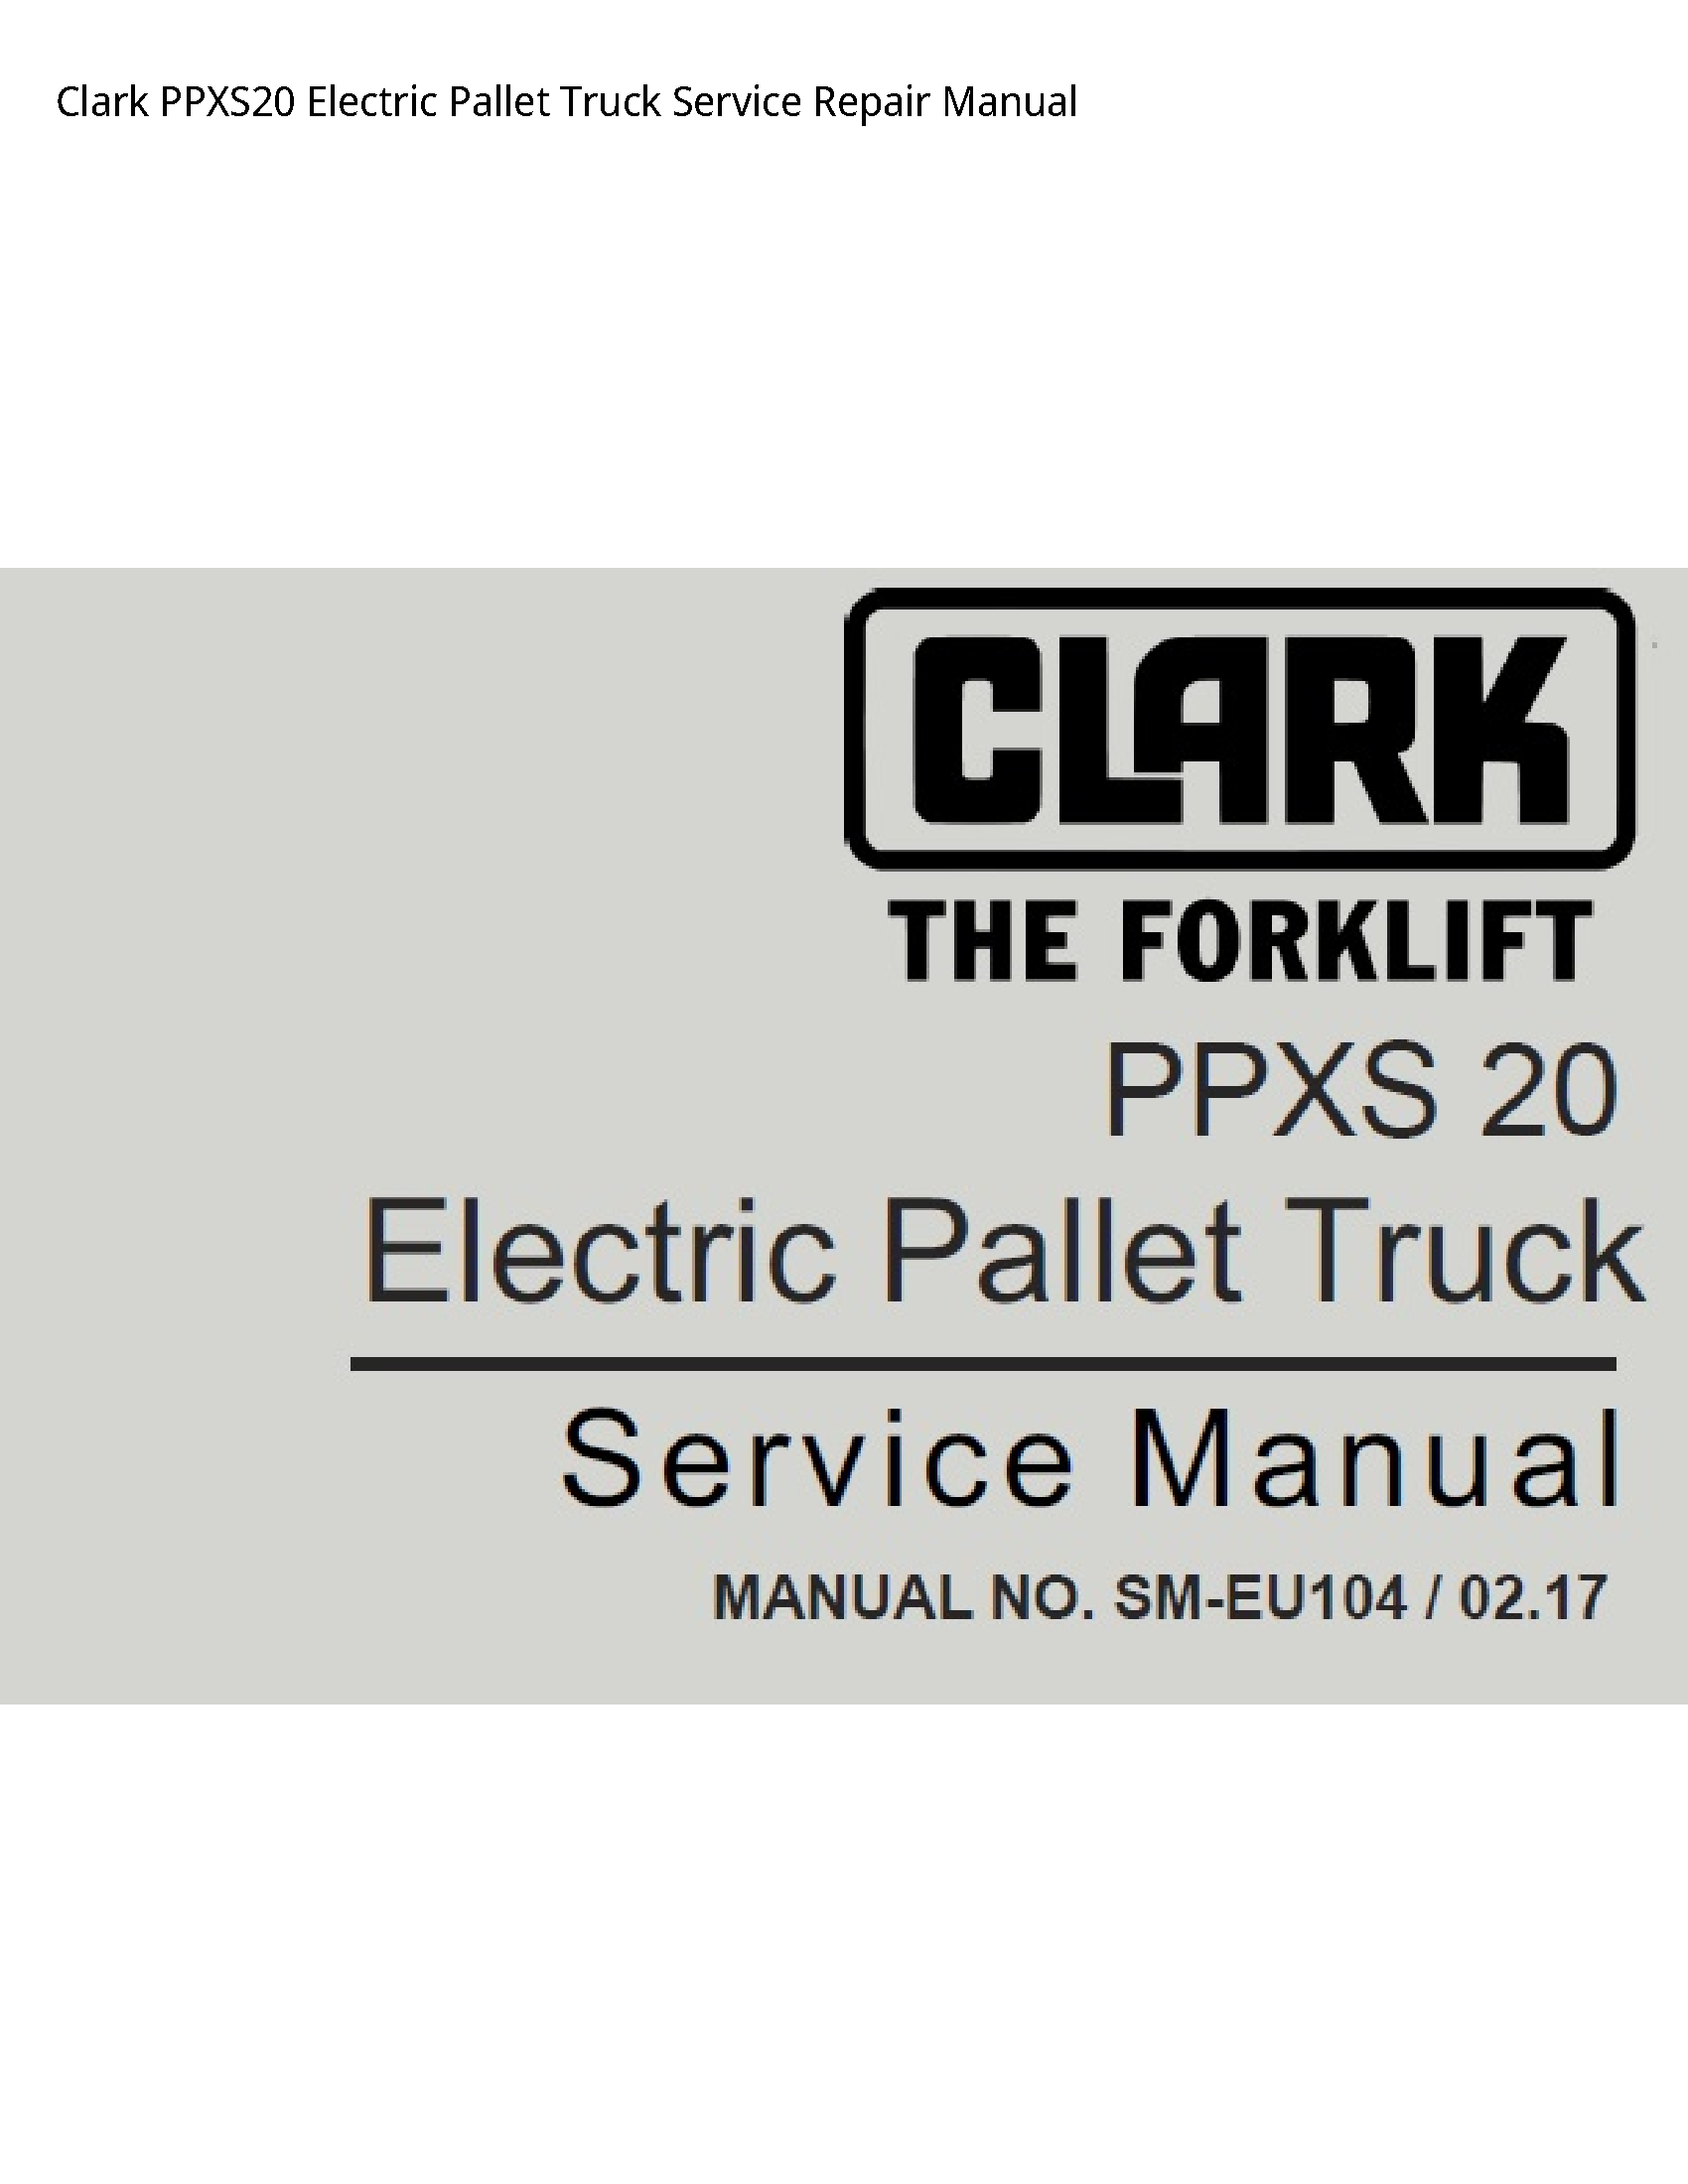 Clark PPXS20 Electric Pallet Truck manual